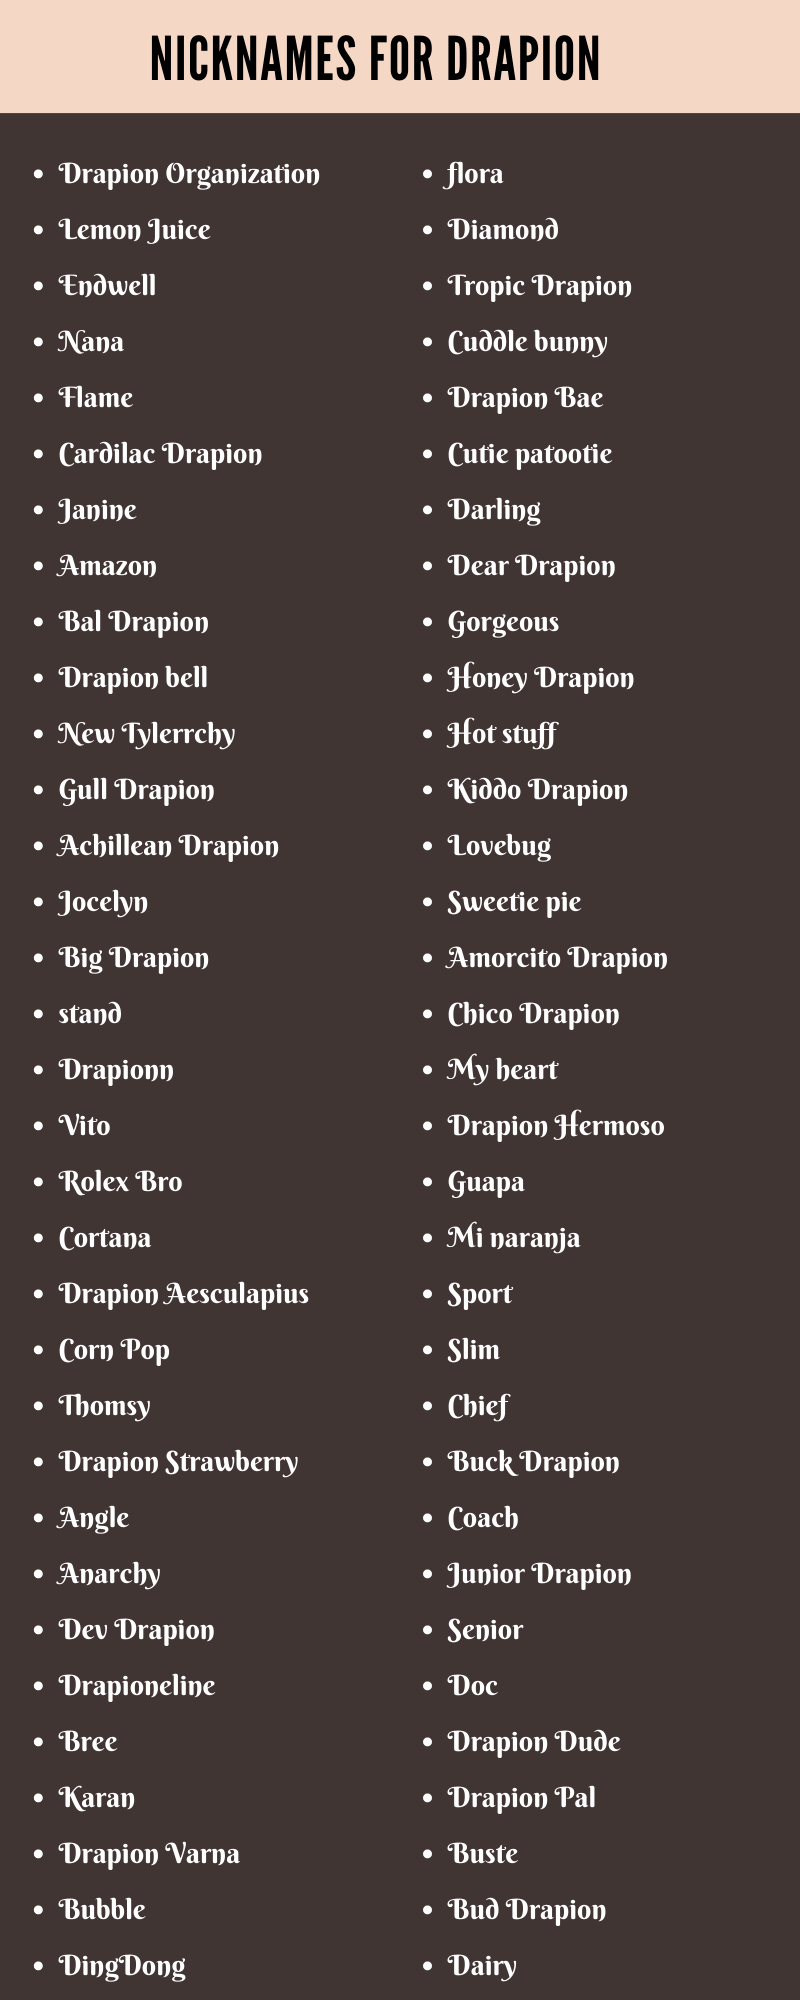 Nicknames For Drapion